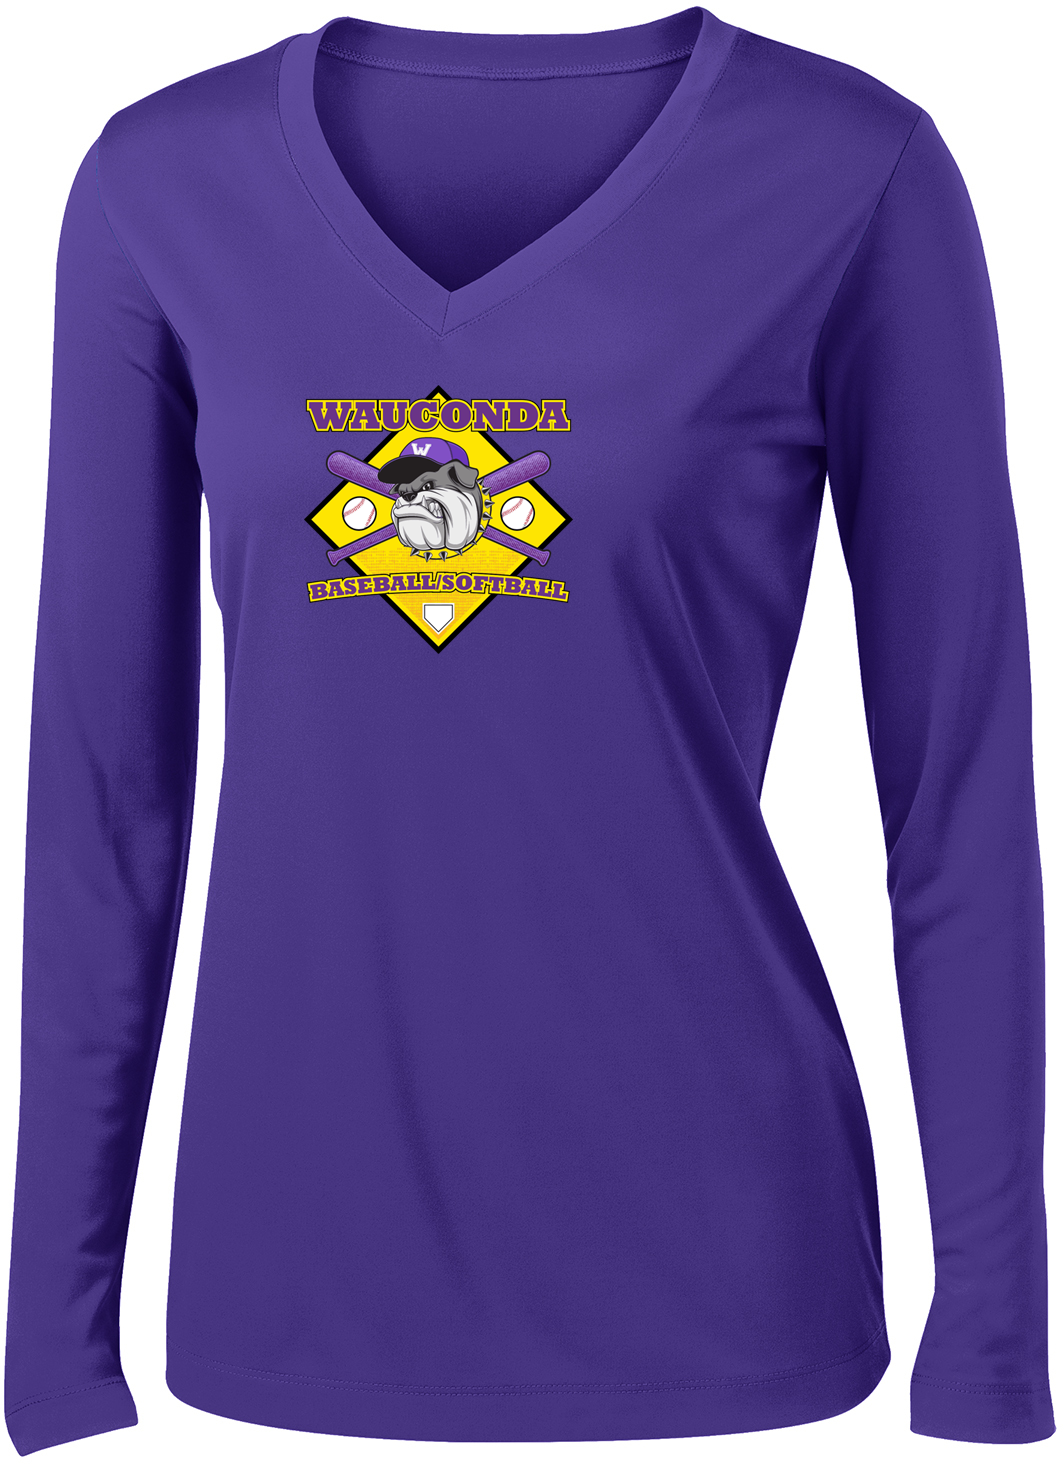 Wauconda Baseball & Softball Women's Long Sleeve Performance Shirt